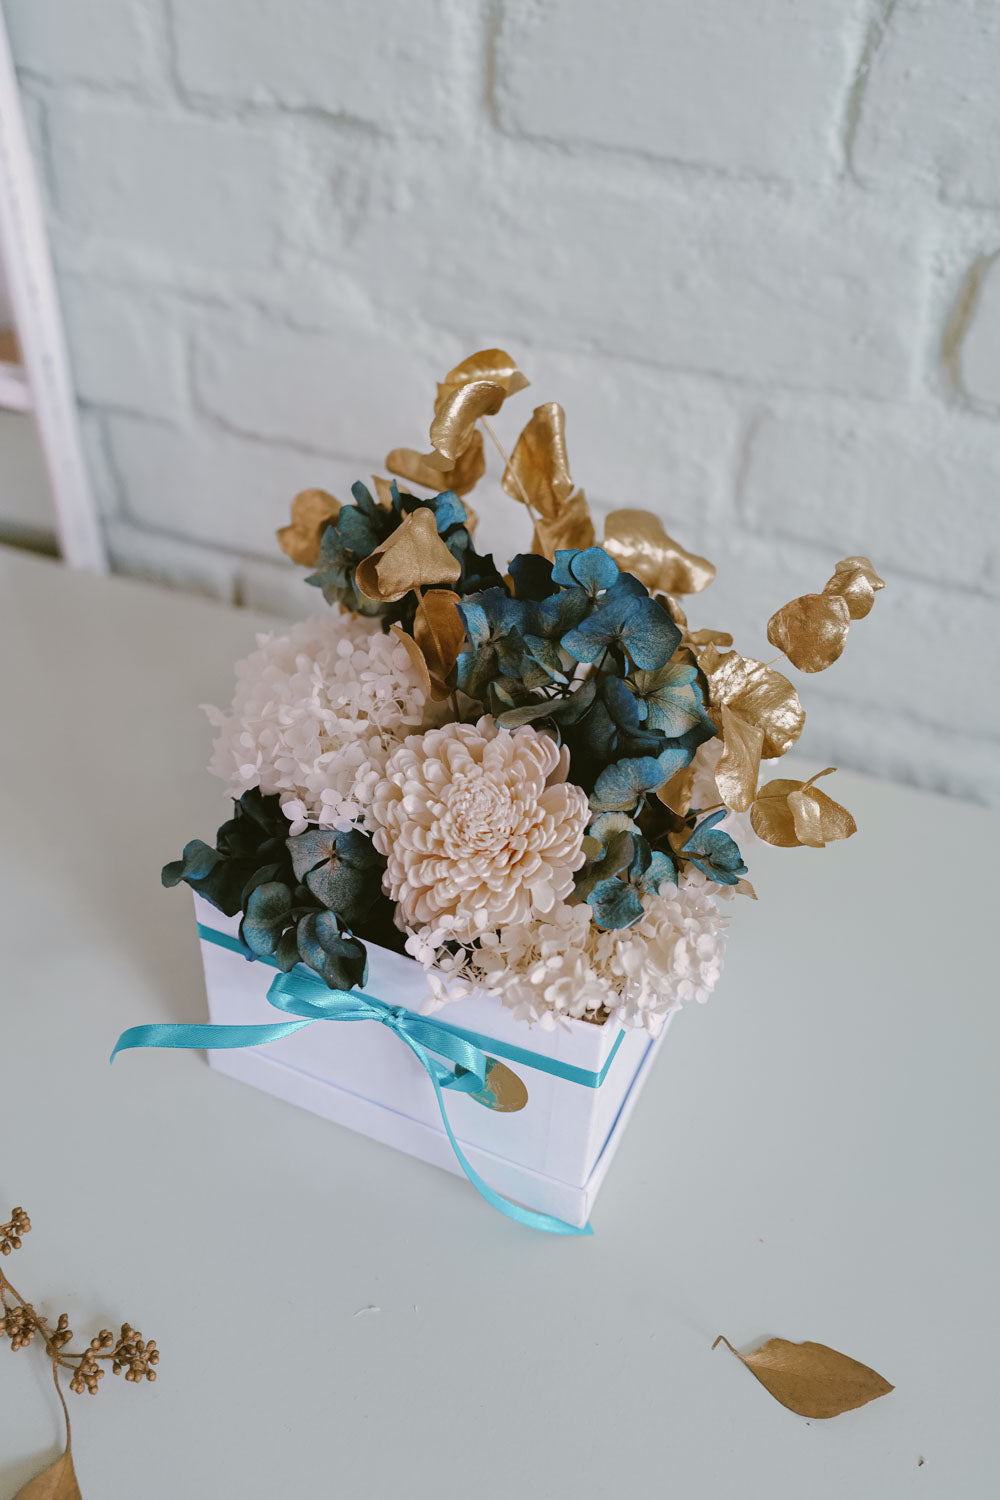 Linda Dried Flower Box